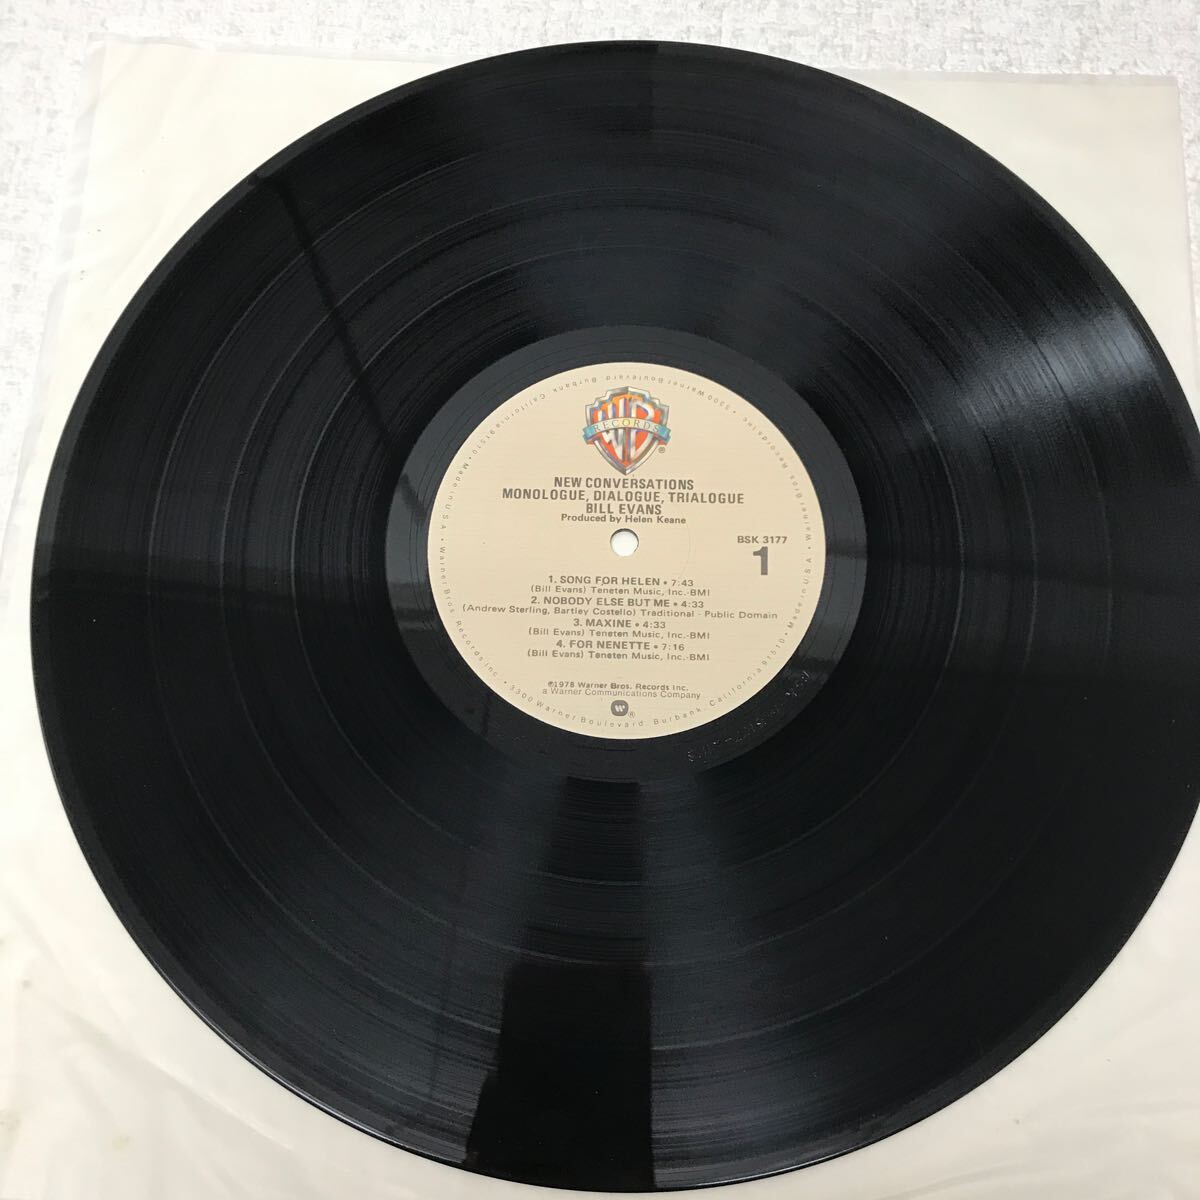 I0516A3 ビル・エヴァンス BILL EVANS NEW CONVERSATIONS LP レコード 音楽 洋楽 ジャズ JAZZ BSK 3177 輸入盤 US盤_画像4